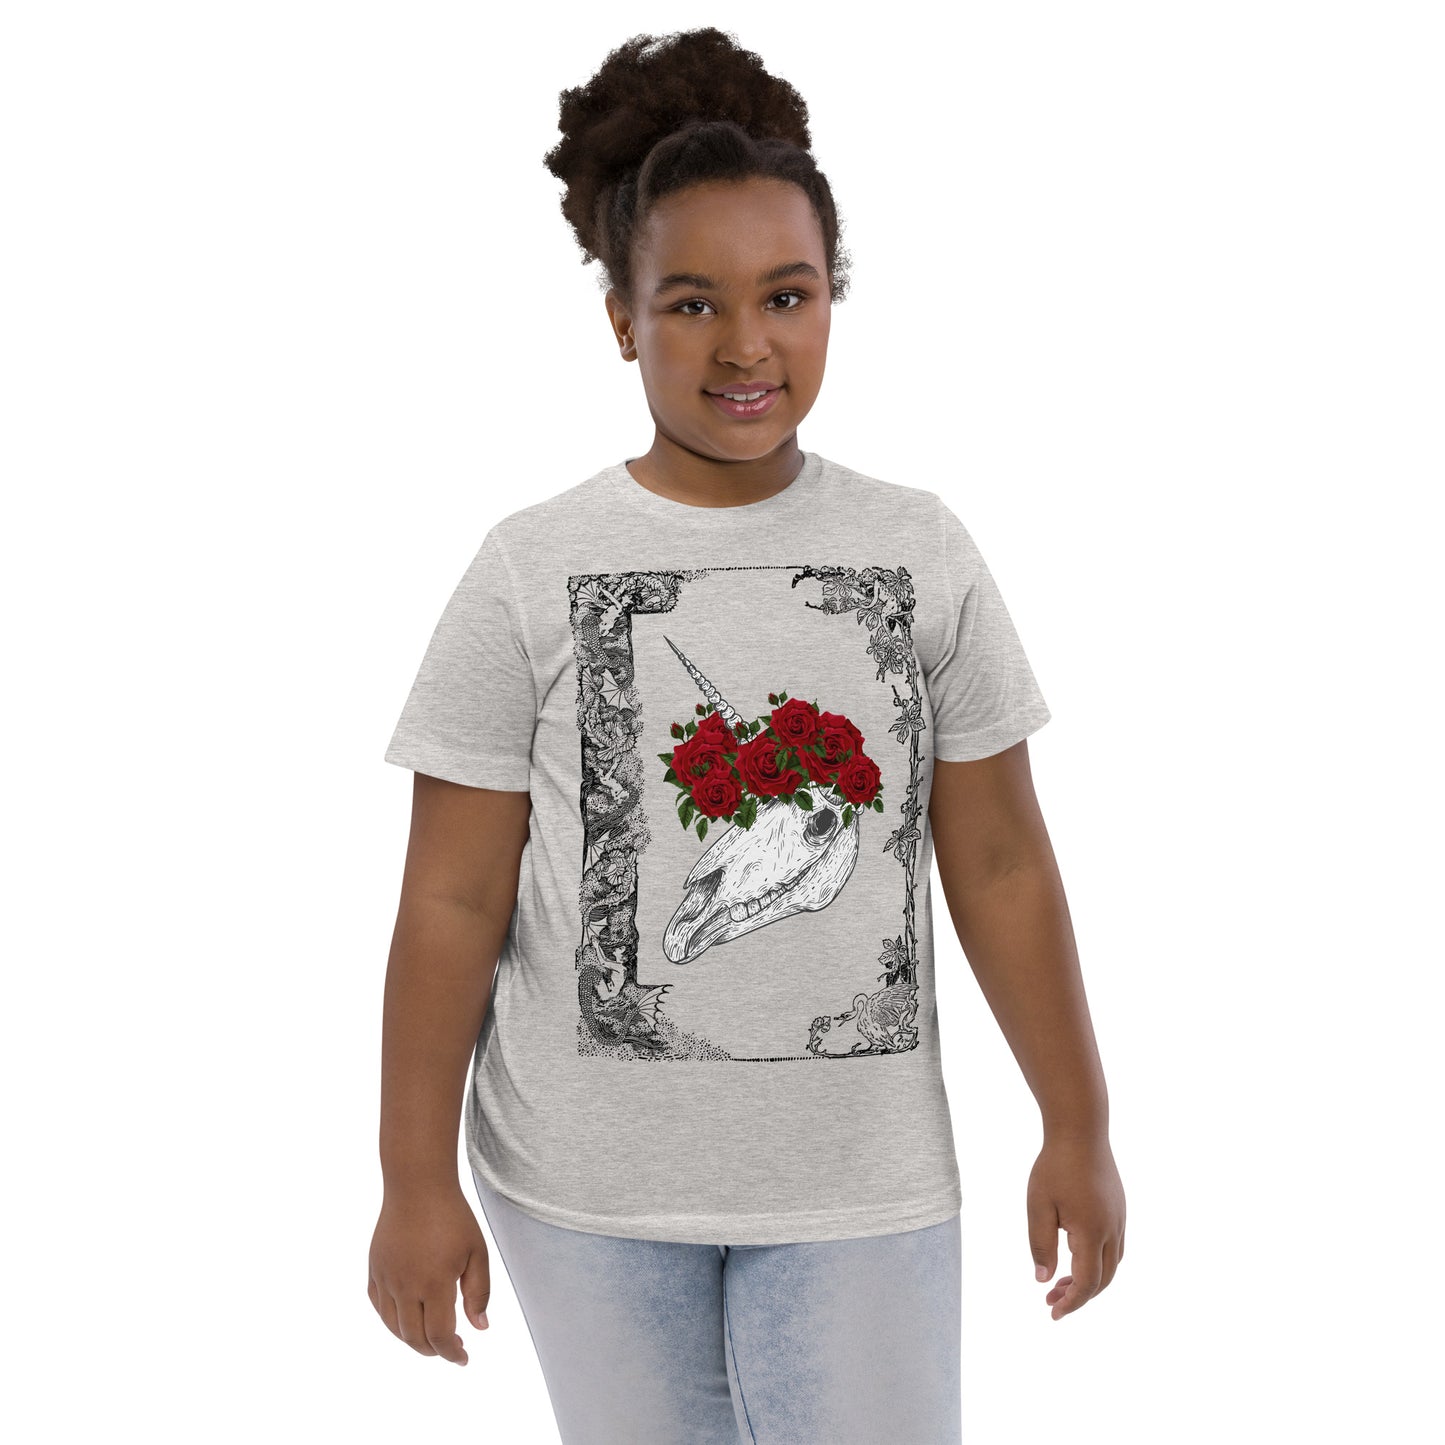 Mari Lwyd Unicorn Youth jersey t-shirt - A. Mandaline Art